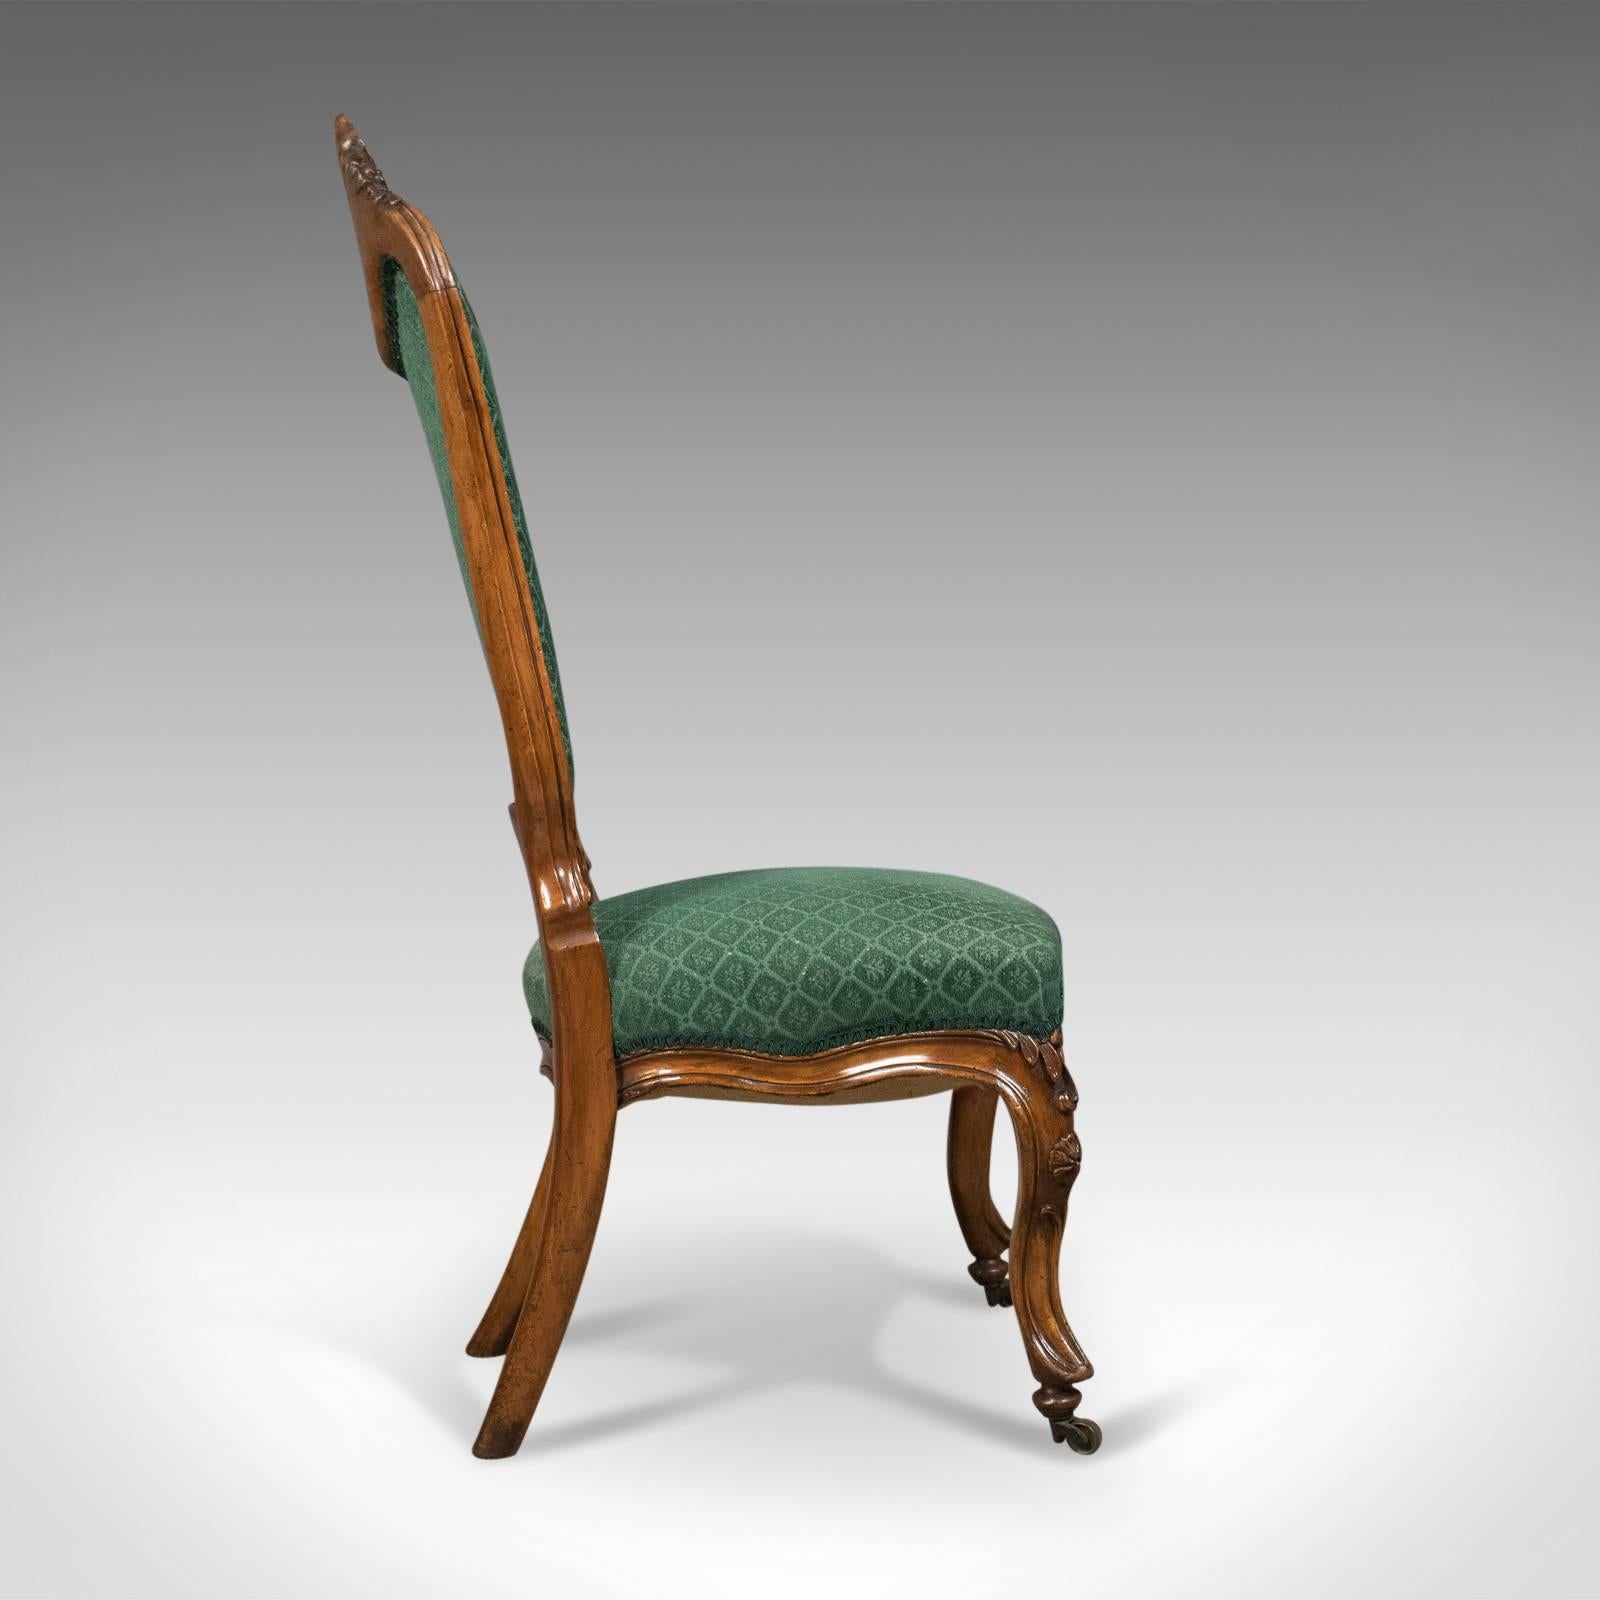 Regency Antique Side Chair, 19th Century, Nursing, Salon, English, Walnut, circa 1820